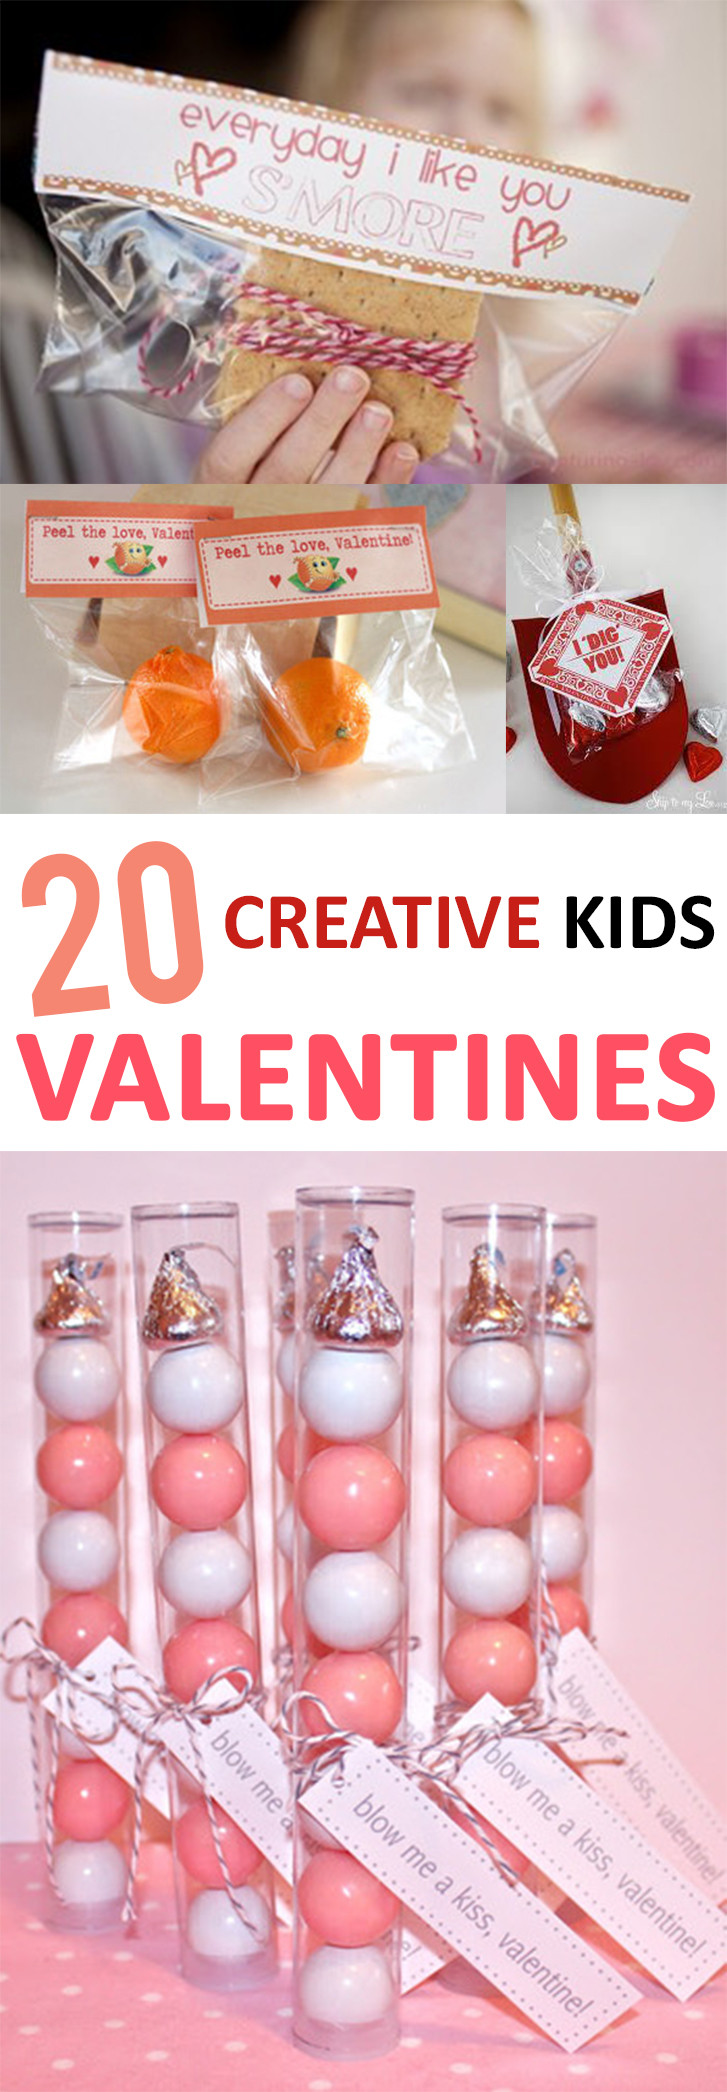 Creatives Ideas For Valentines Day
 20 Creative Kid s Valentines